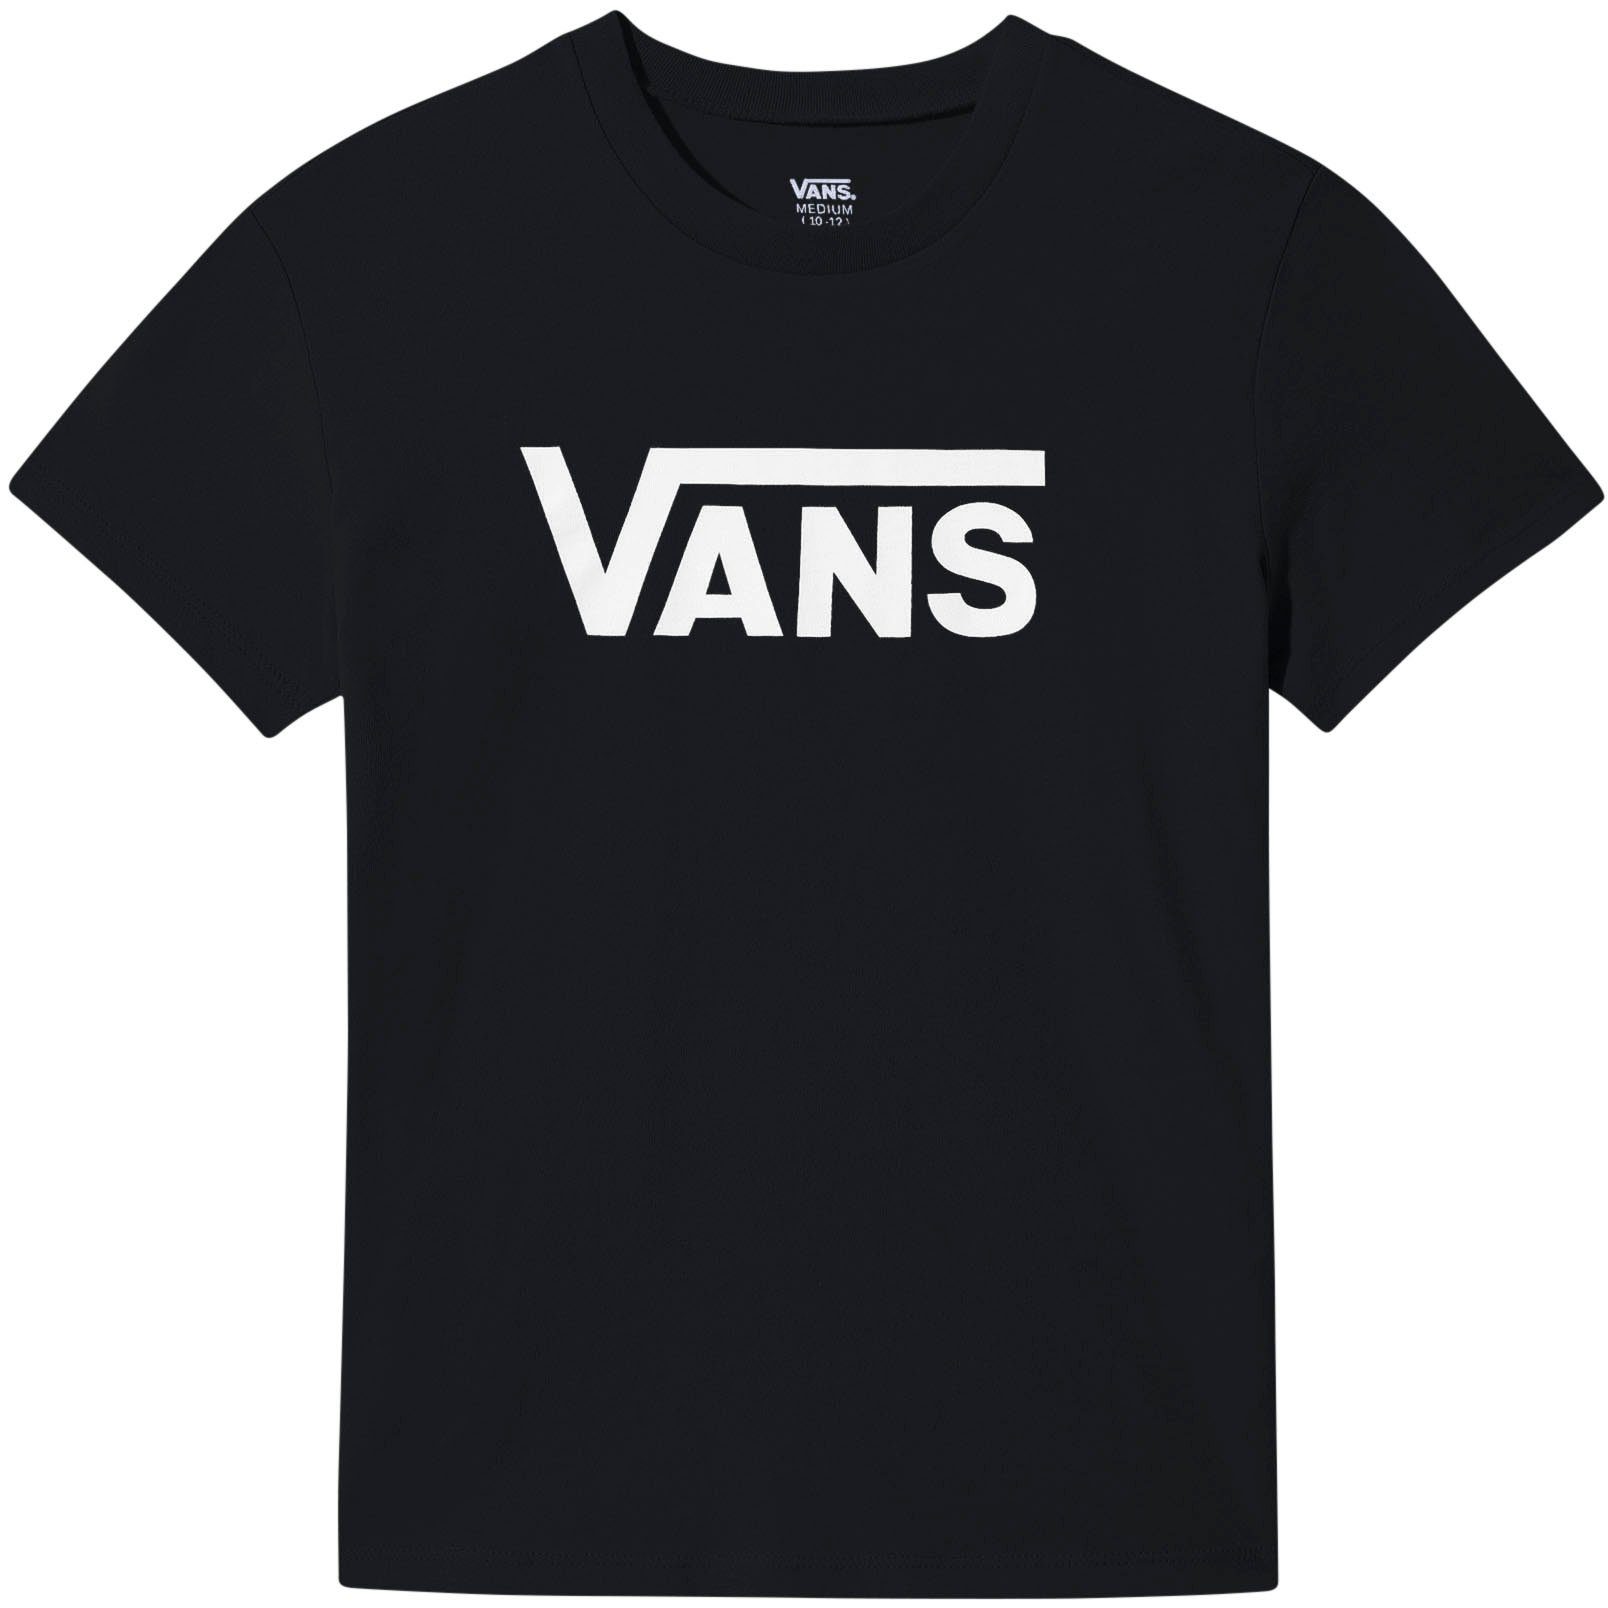 Vans T-Shirt FLYING V CREW GIRLS" schwarz-weiß